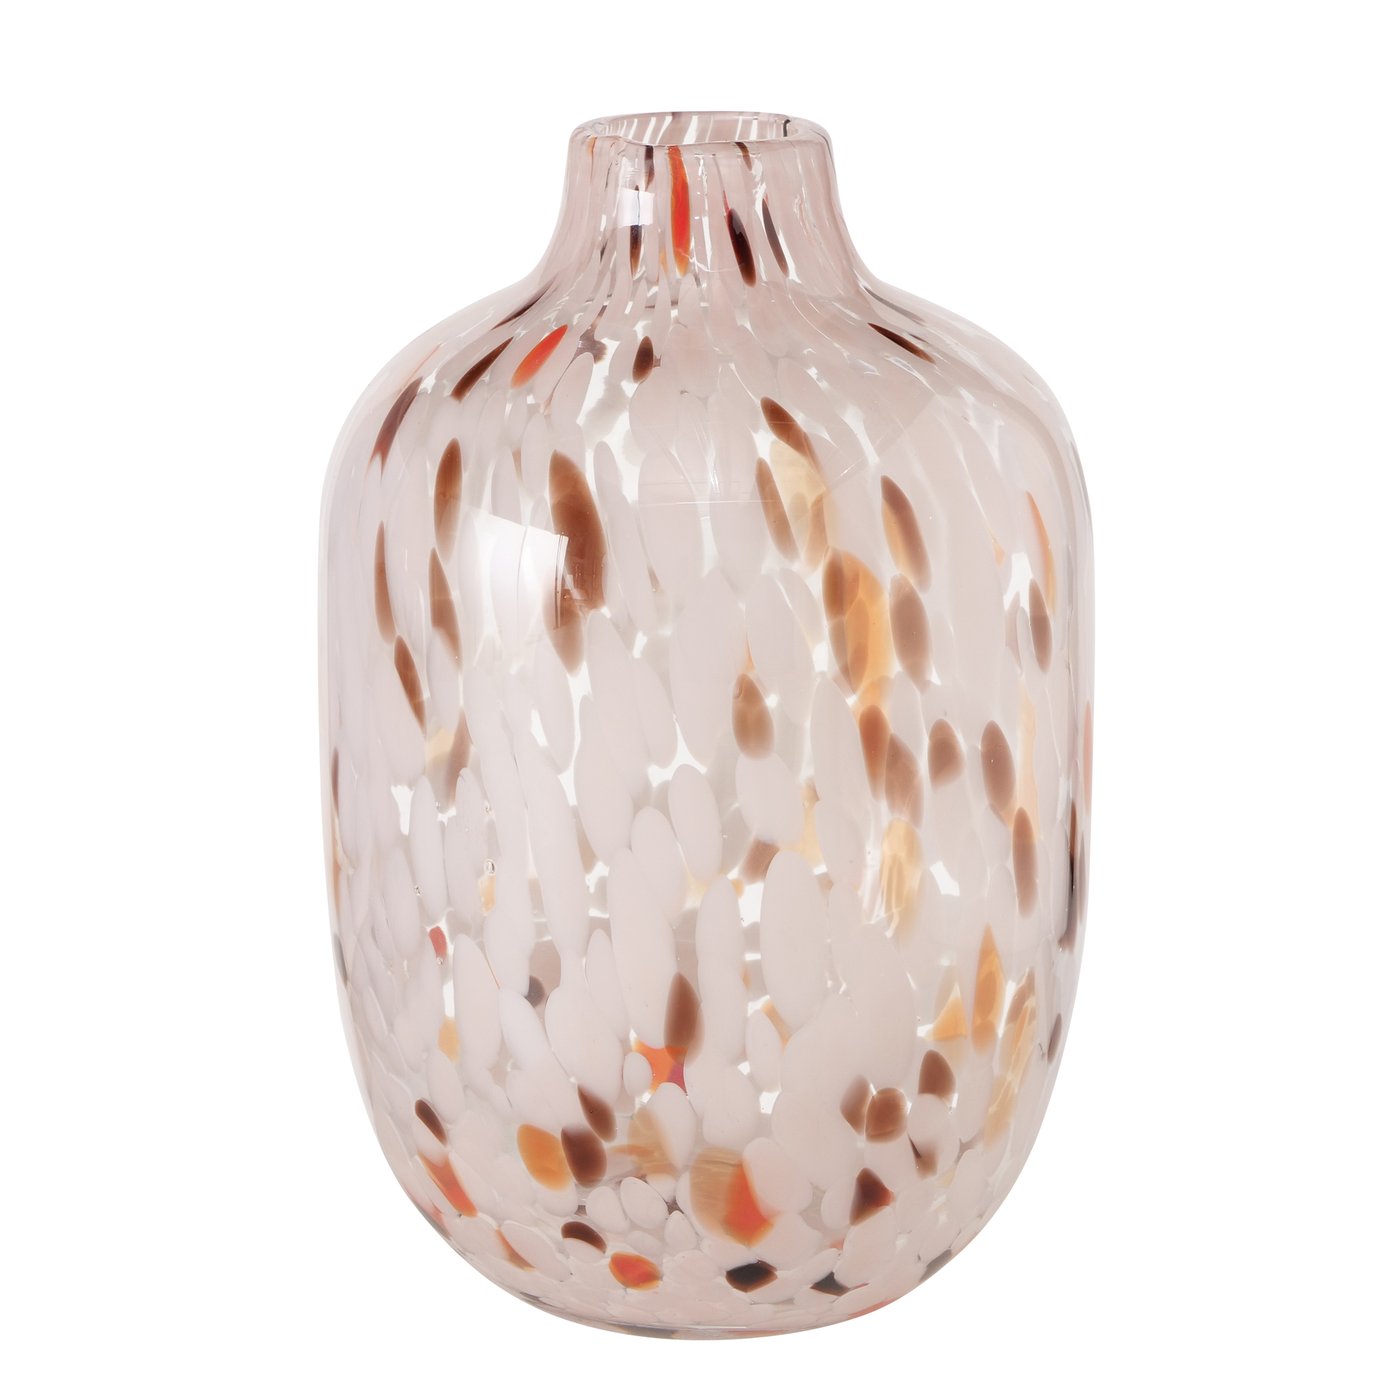 &Quirky Speckled Brown & Orange Glass Vase